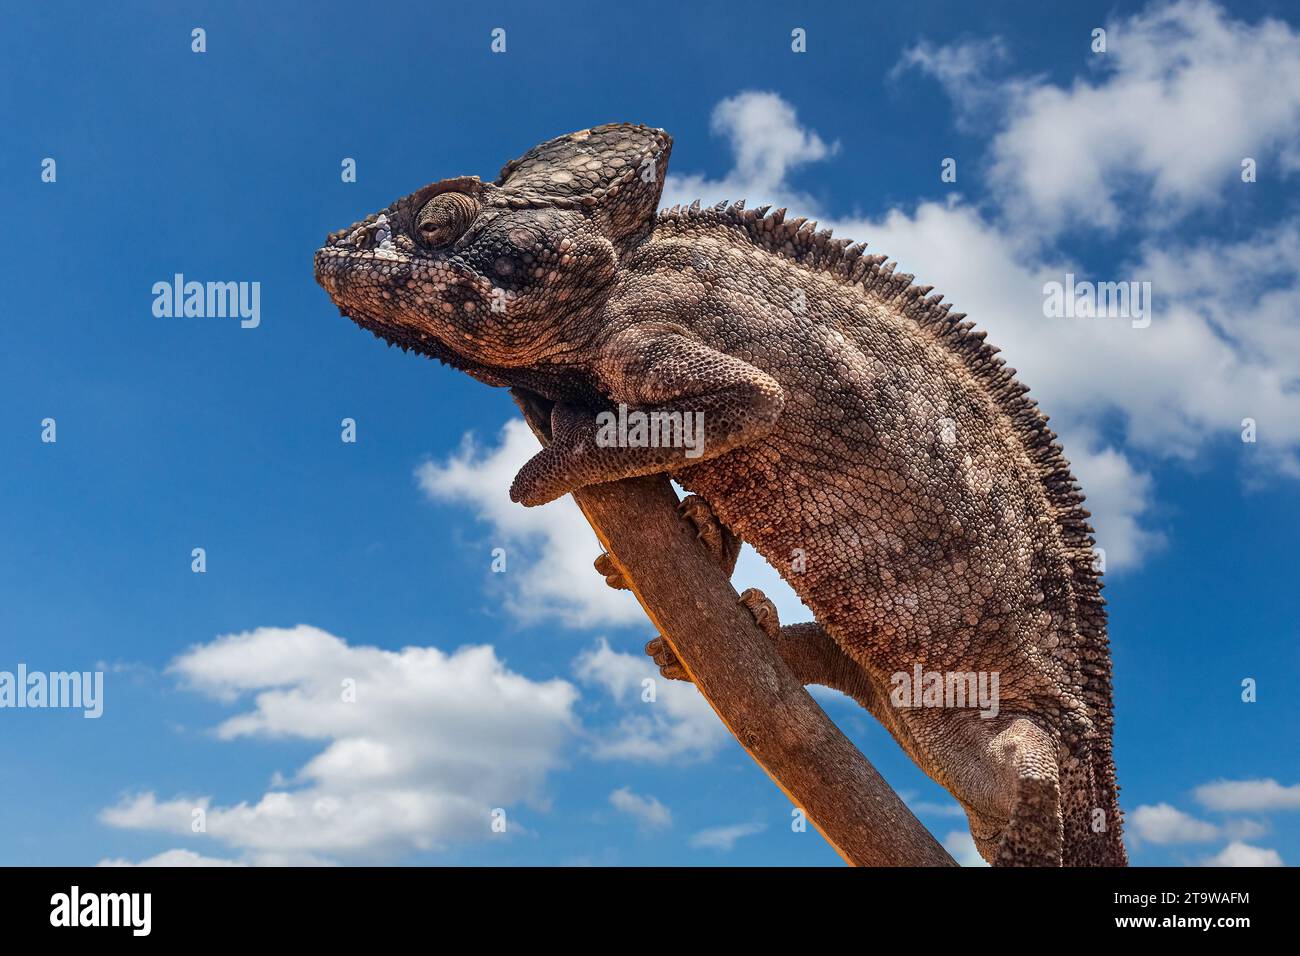 Malagasy giant chameleon / Oustalet's chameleon (Furcifer oustaleti), Central Highlands, Madagascar, Africa Stock Photo